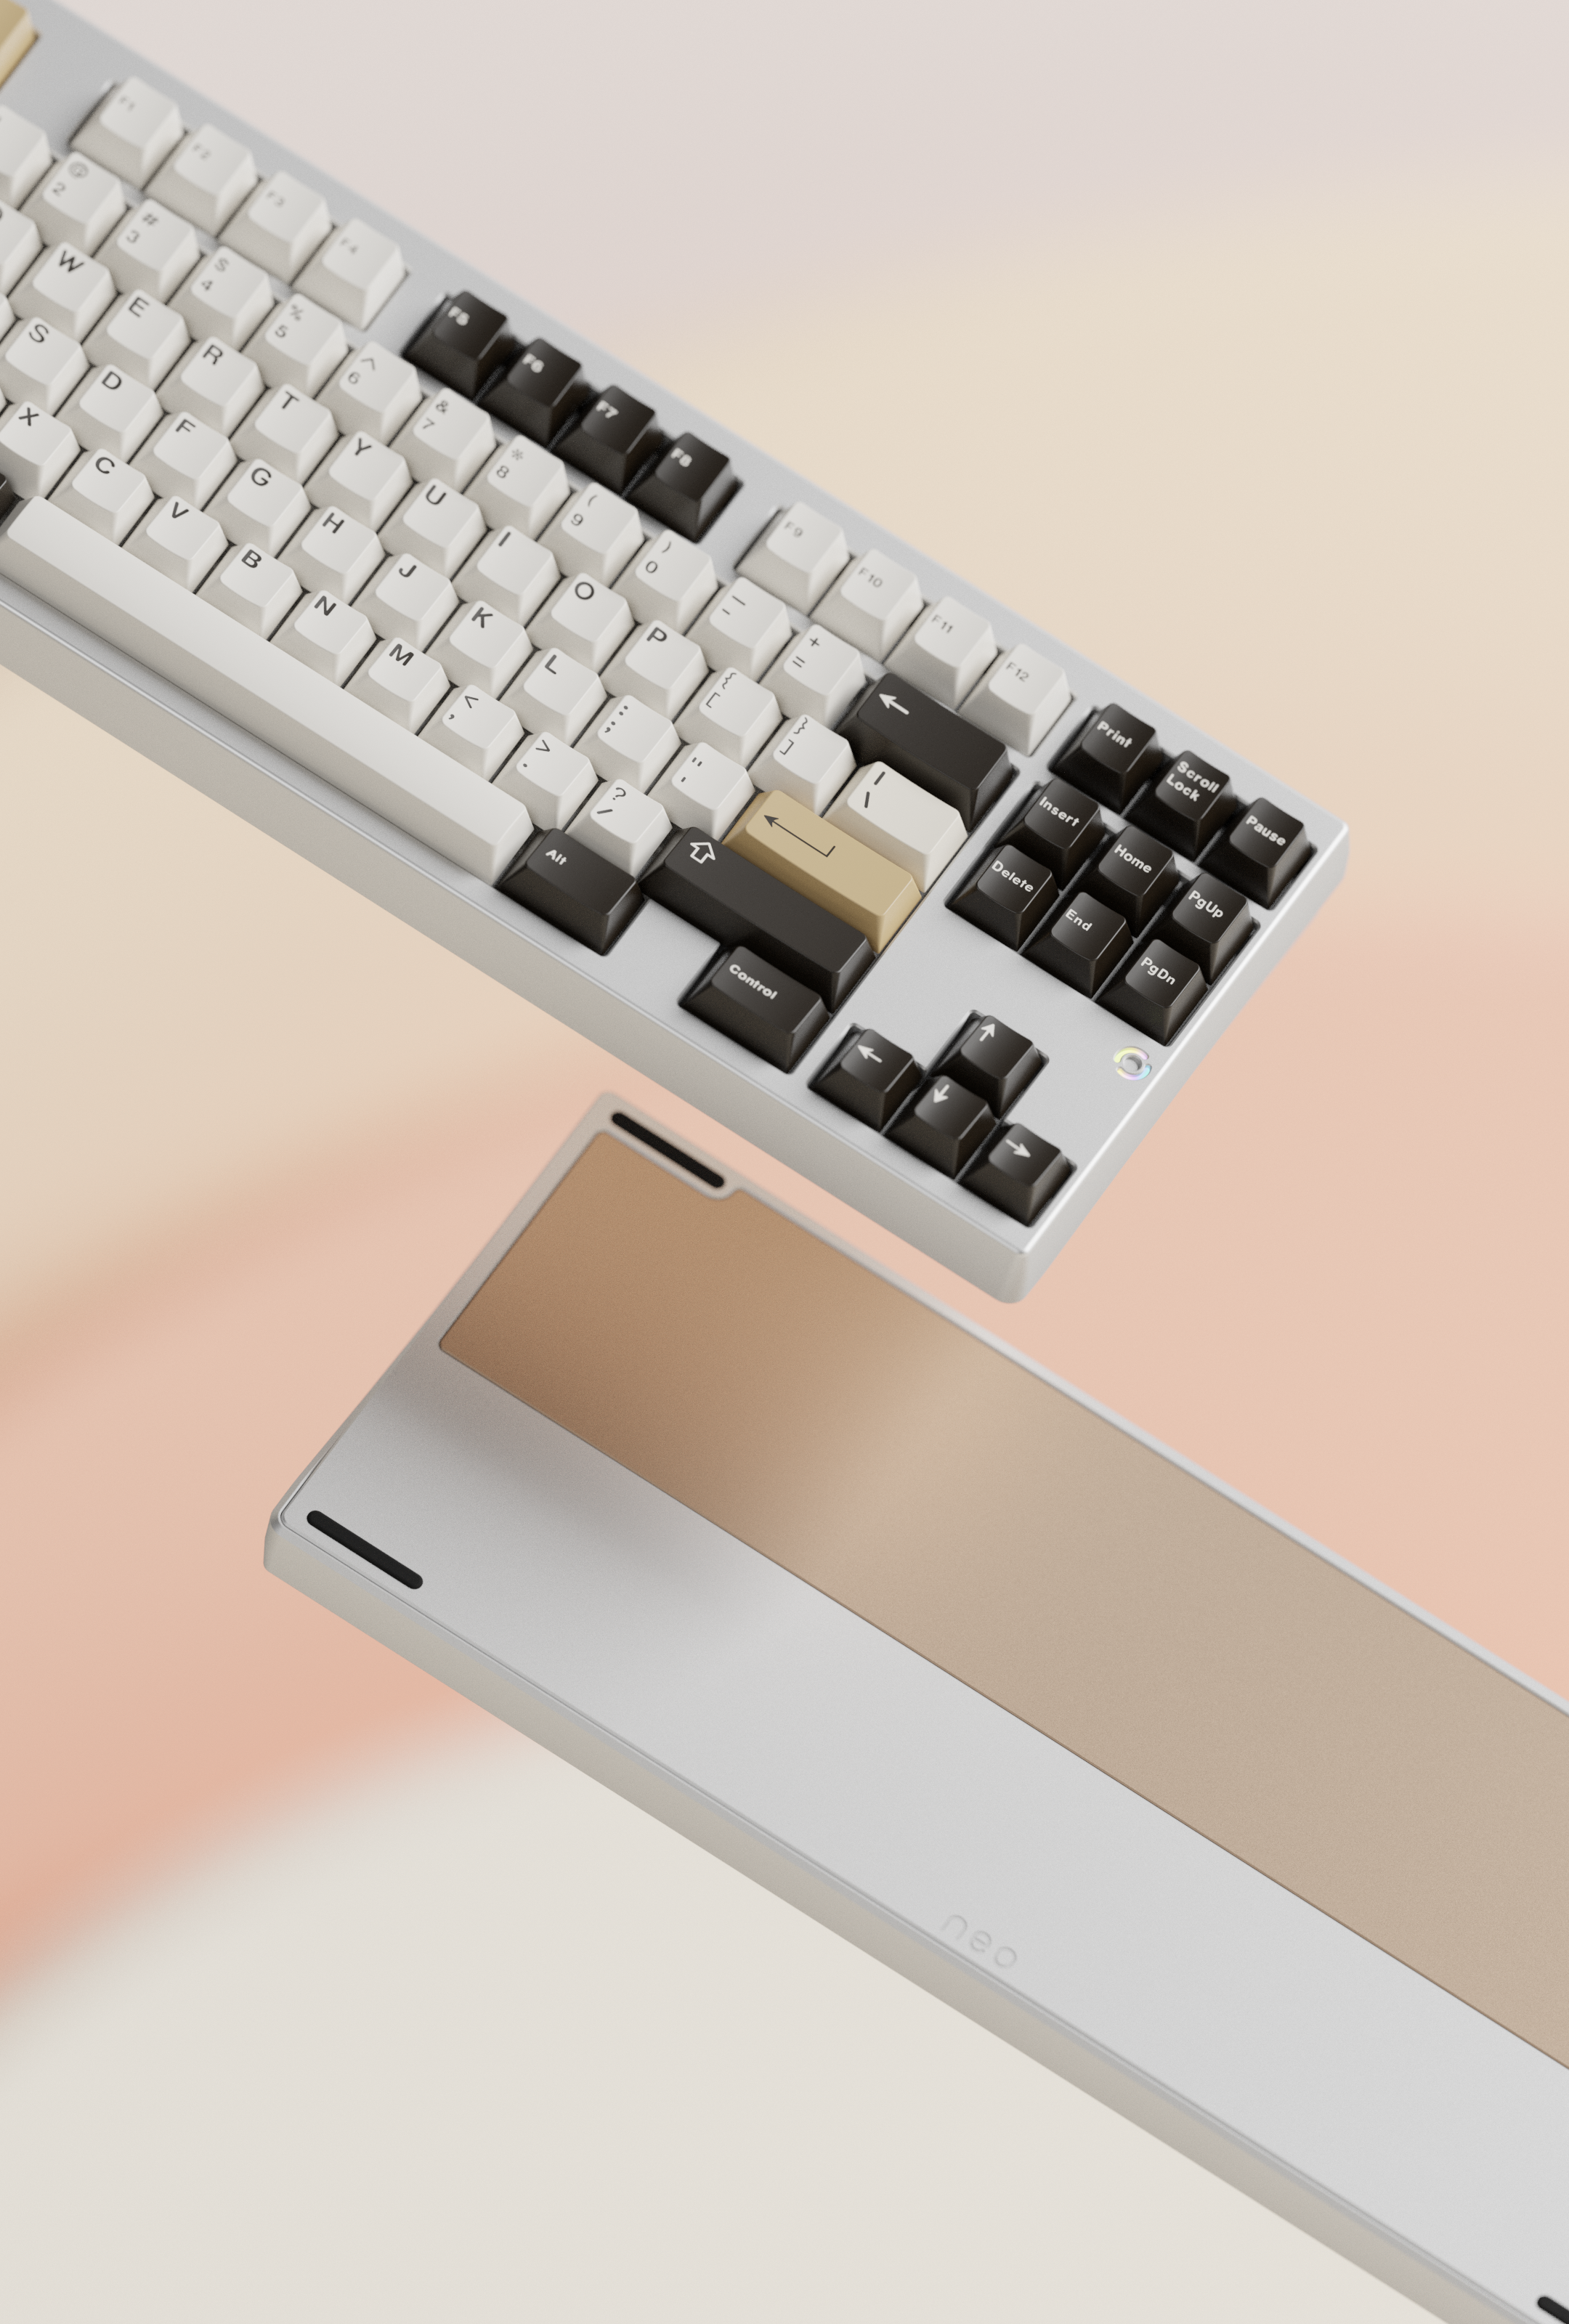 Neo80 - Keyboard Kit (Pre-Order)